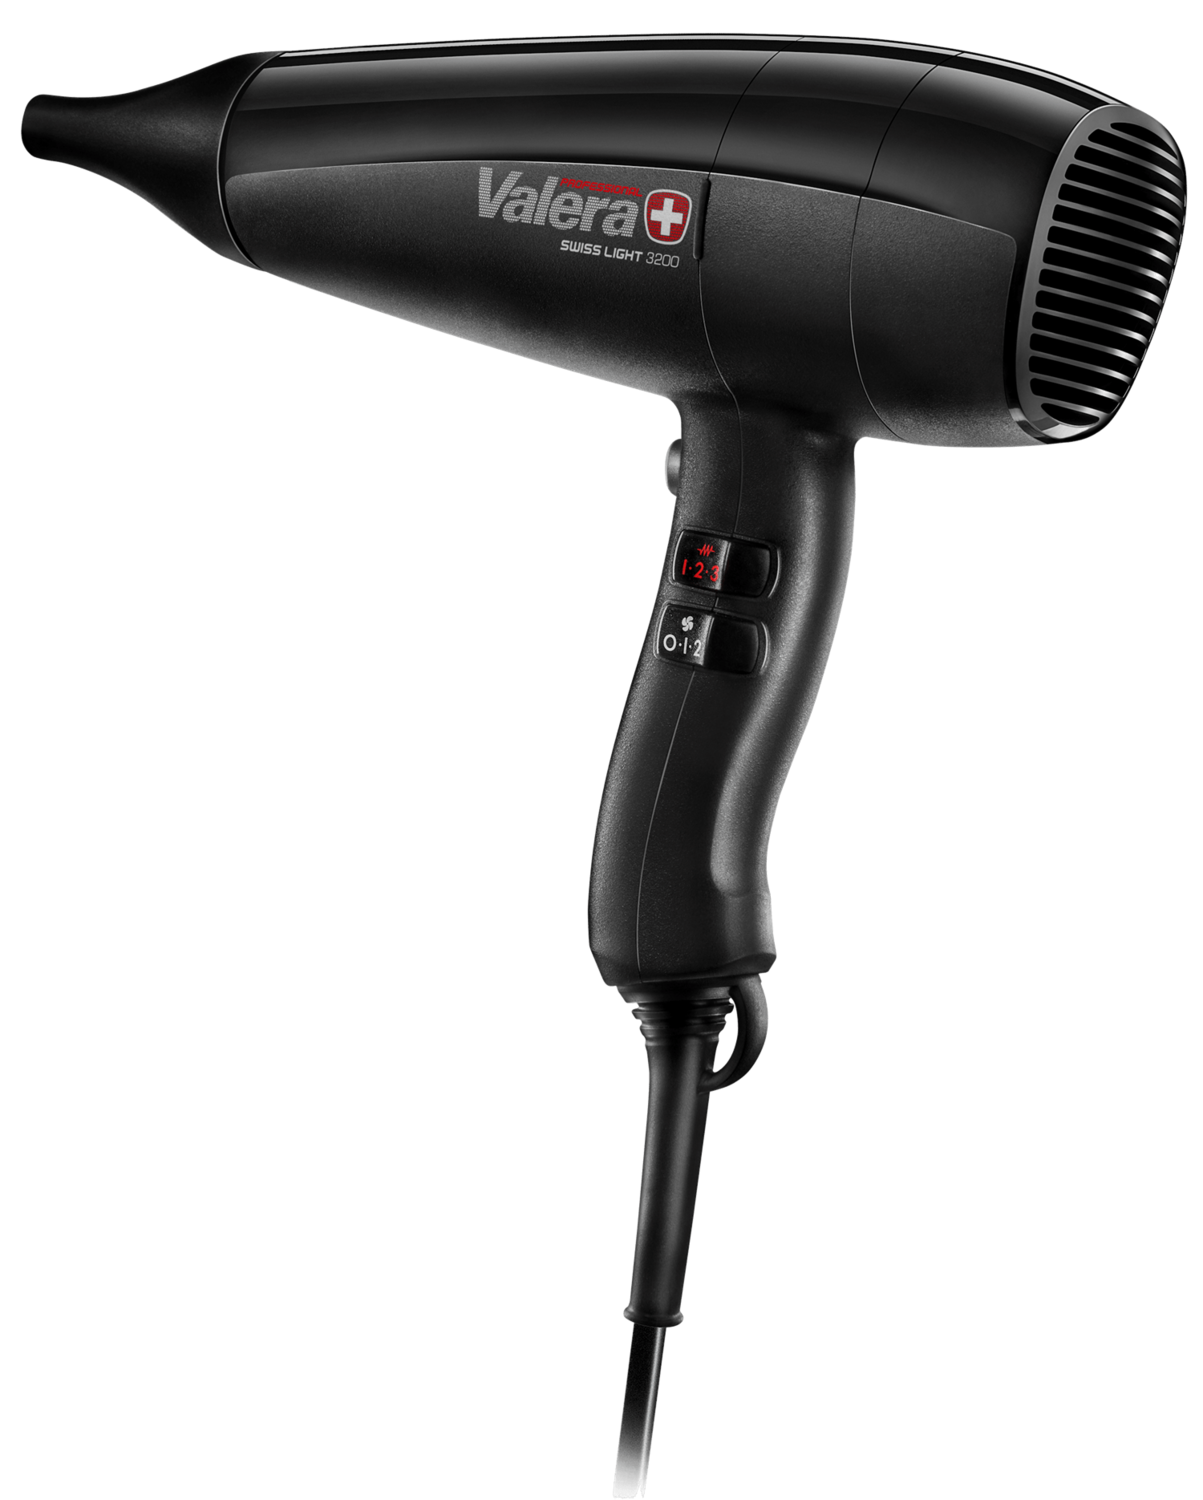 Valera Swiss Light 3200 1600w latching hair dryer